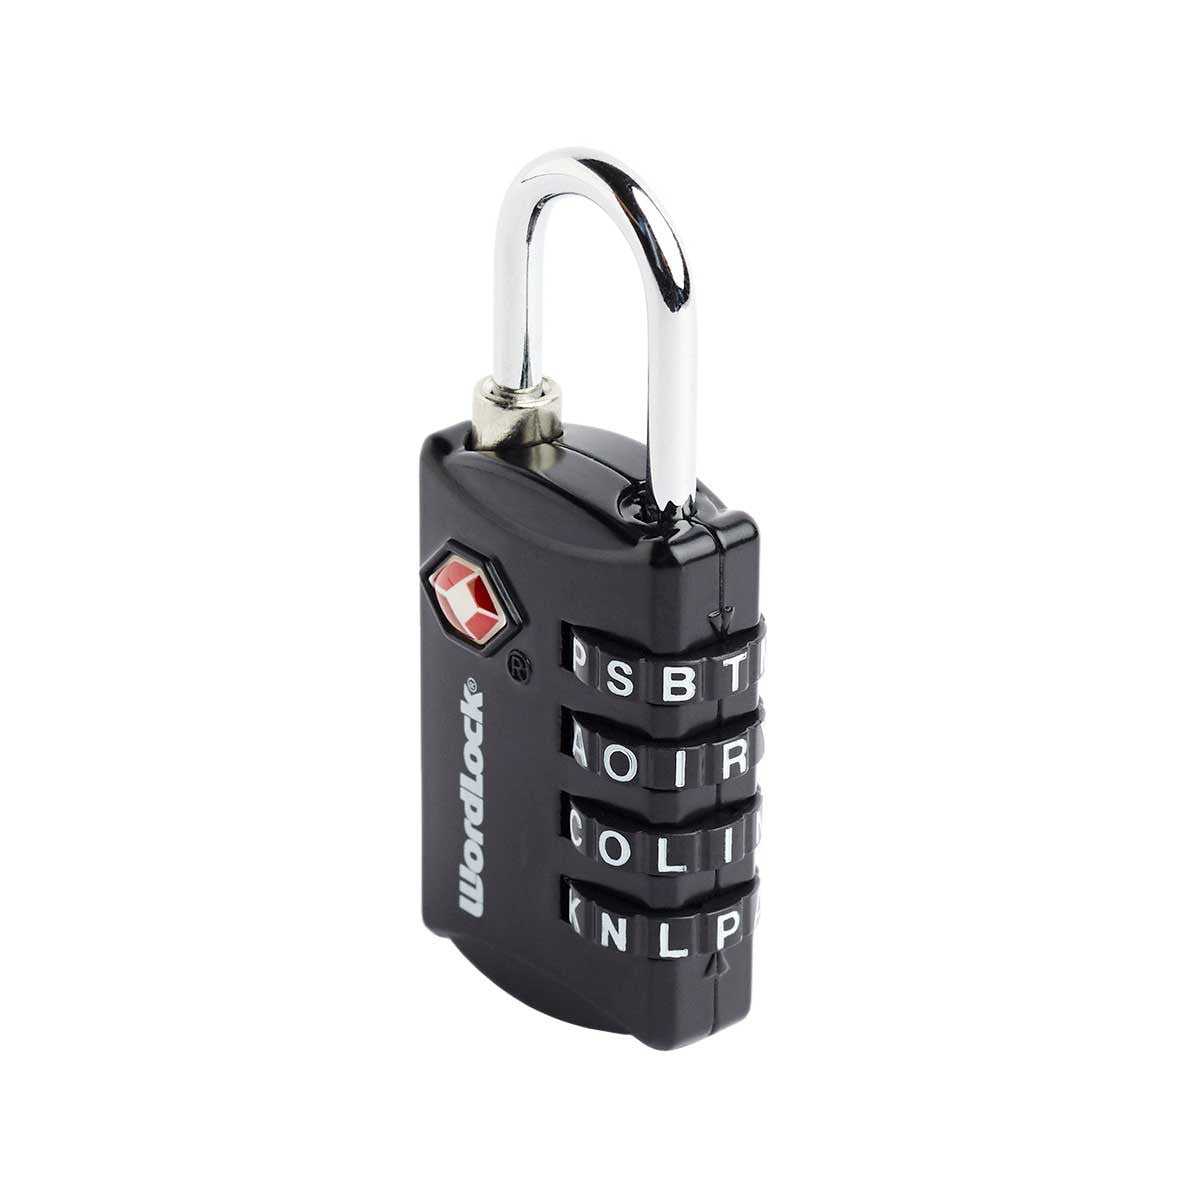 Korjo Wordlock TSA-approved luggage lock